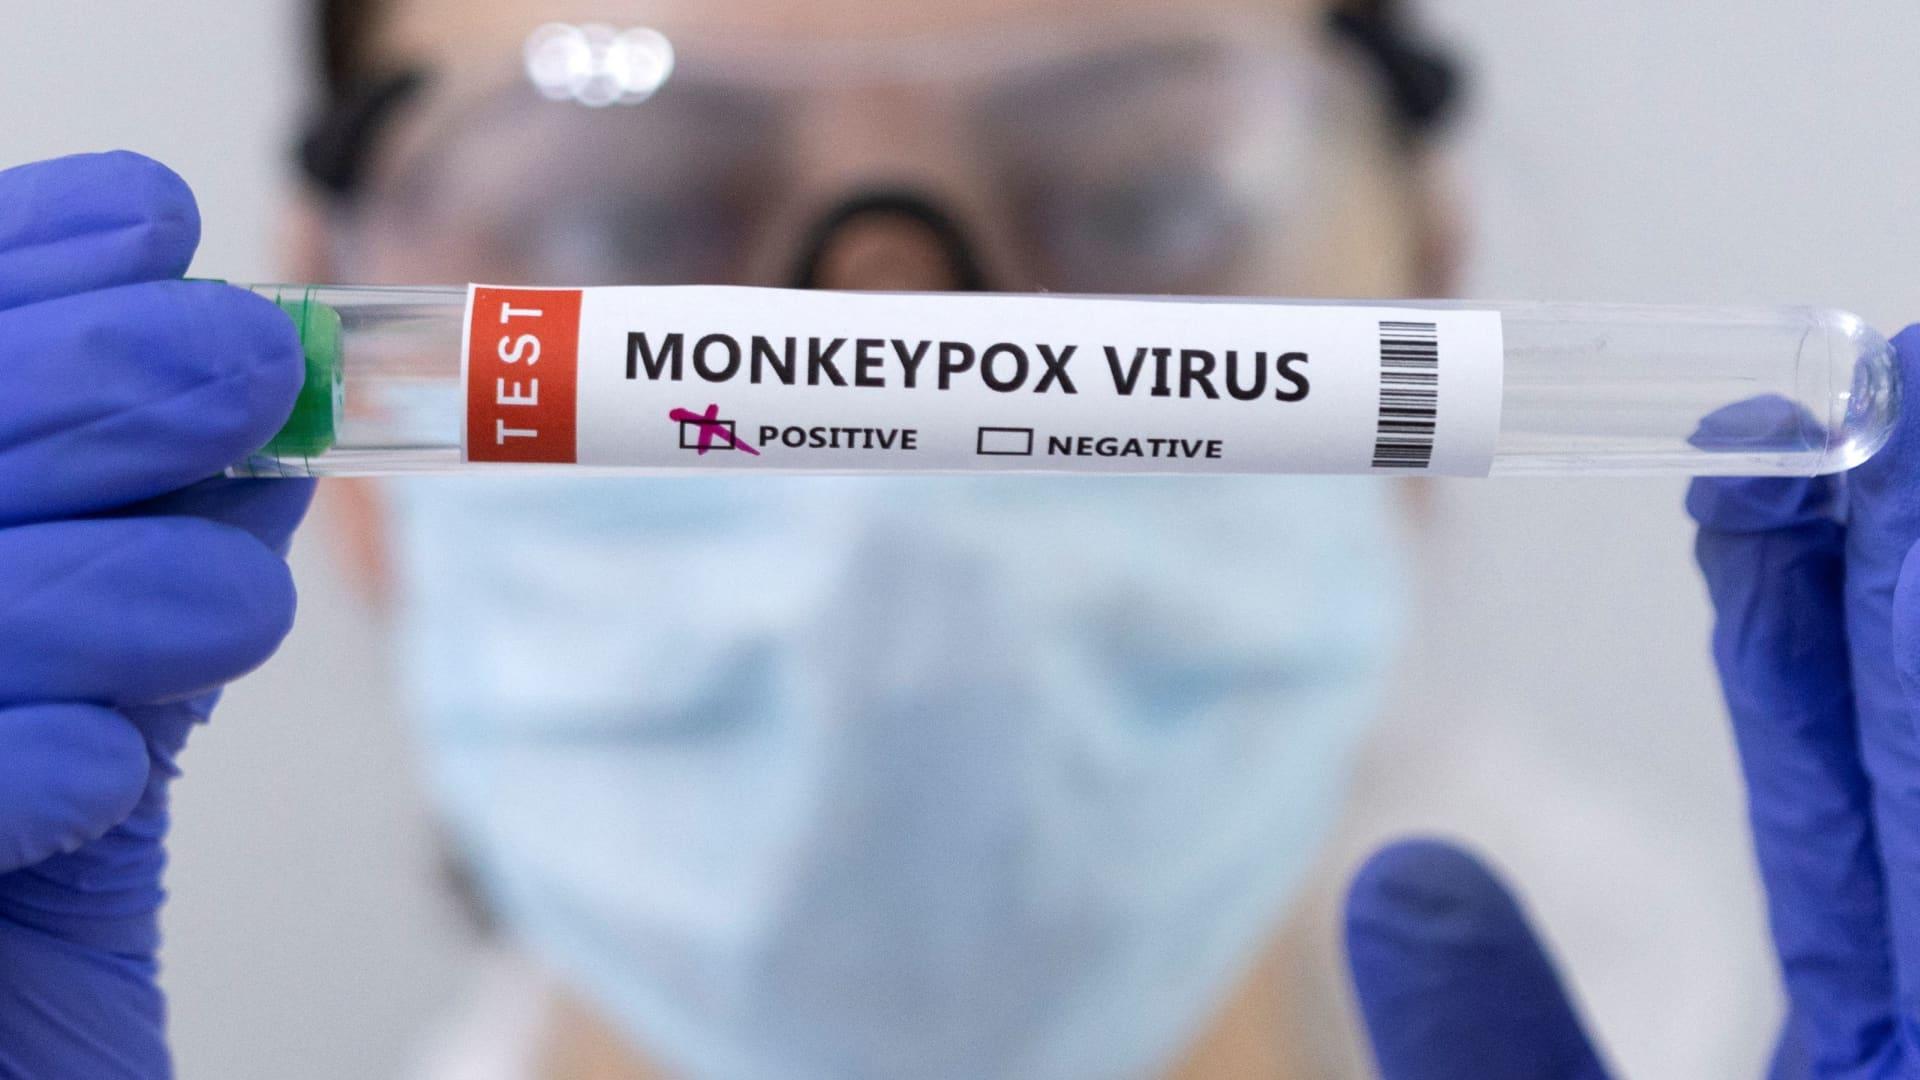 S. Sudan on alert as Congo, Sudan record monkeypox cases